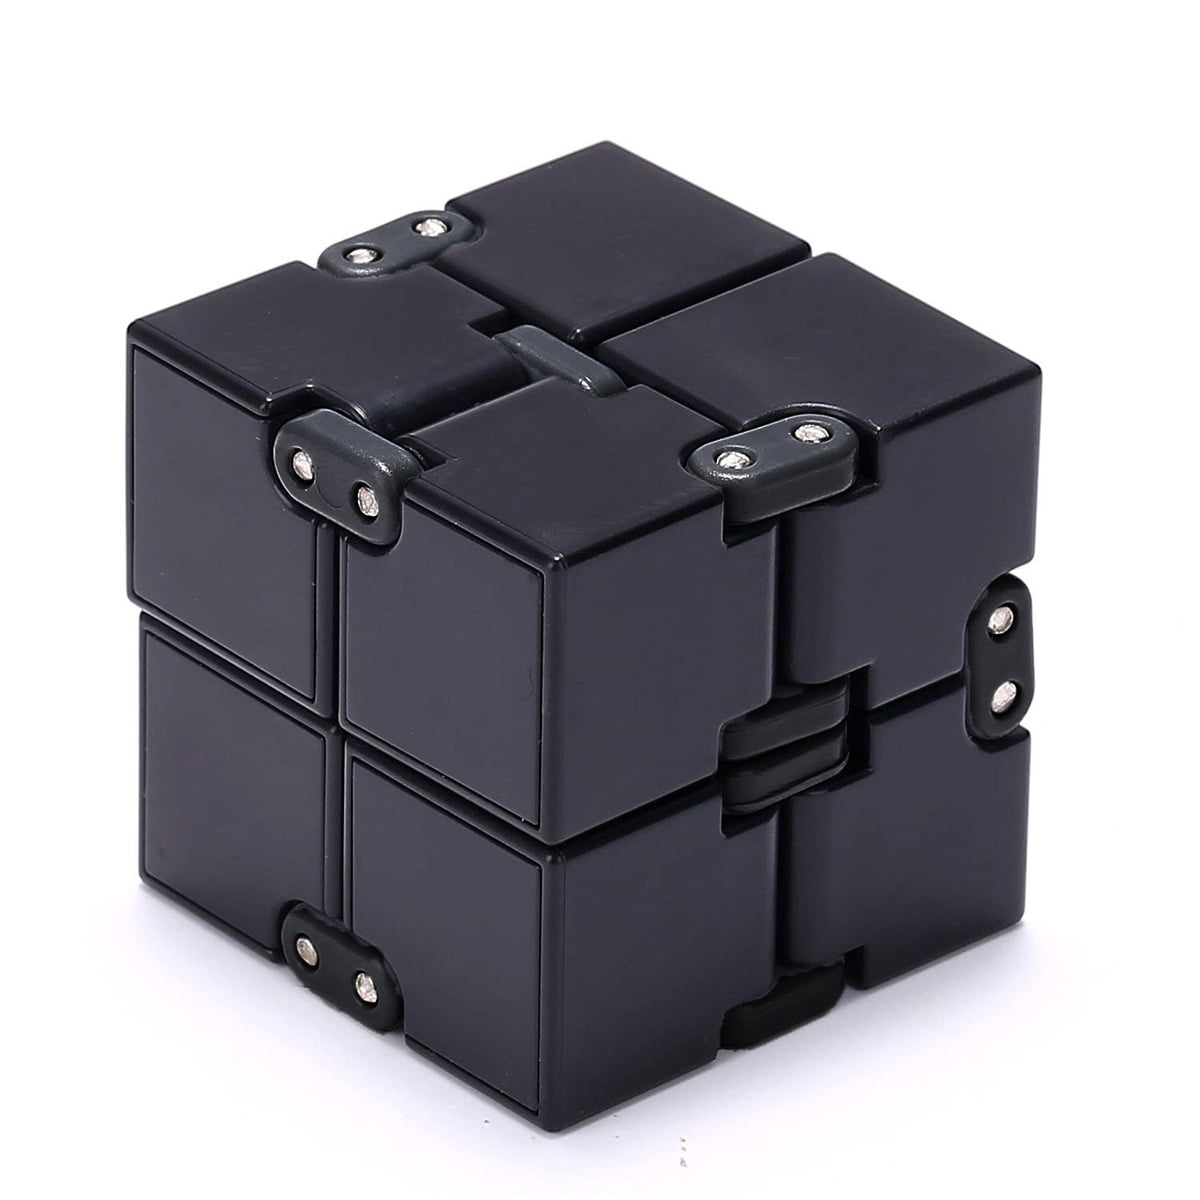 NEW 2019 Infinity Cube Stress Relief Fidget Anti Anxiety Toy 